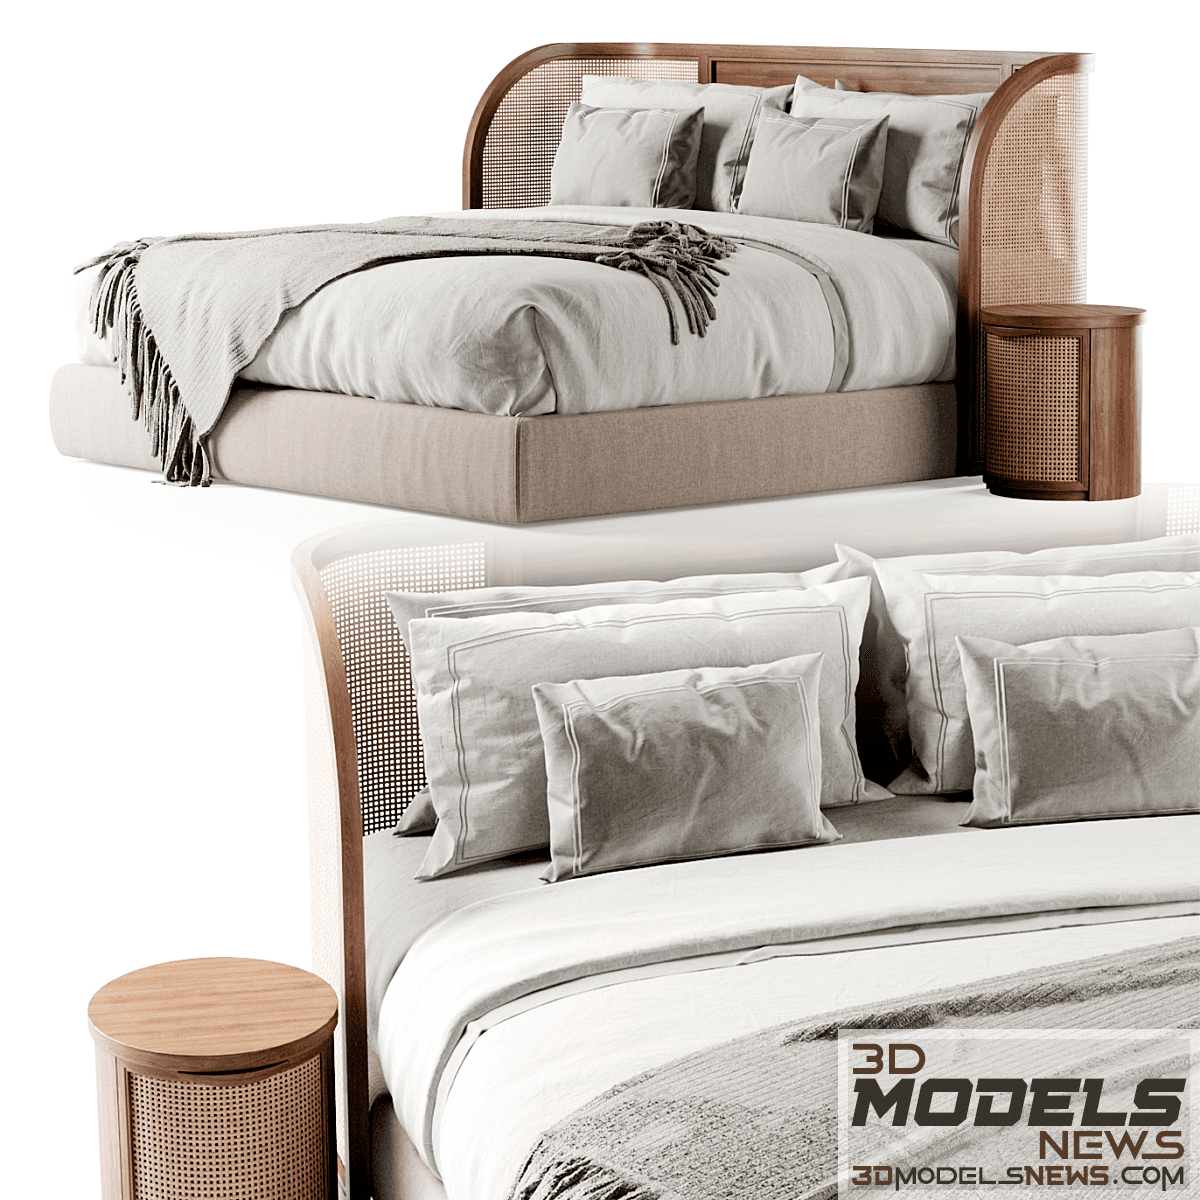 Wooden double bed rattan model 1